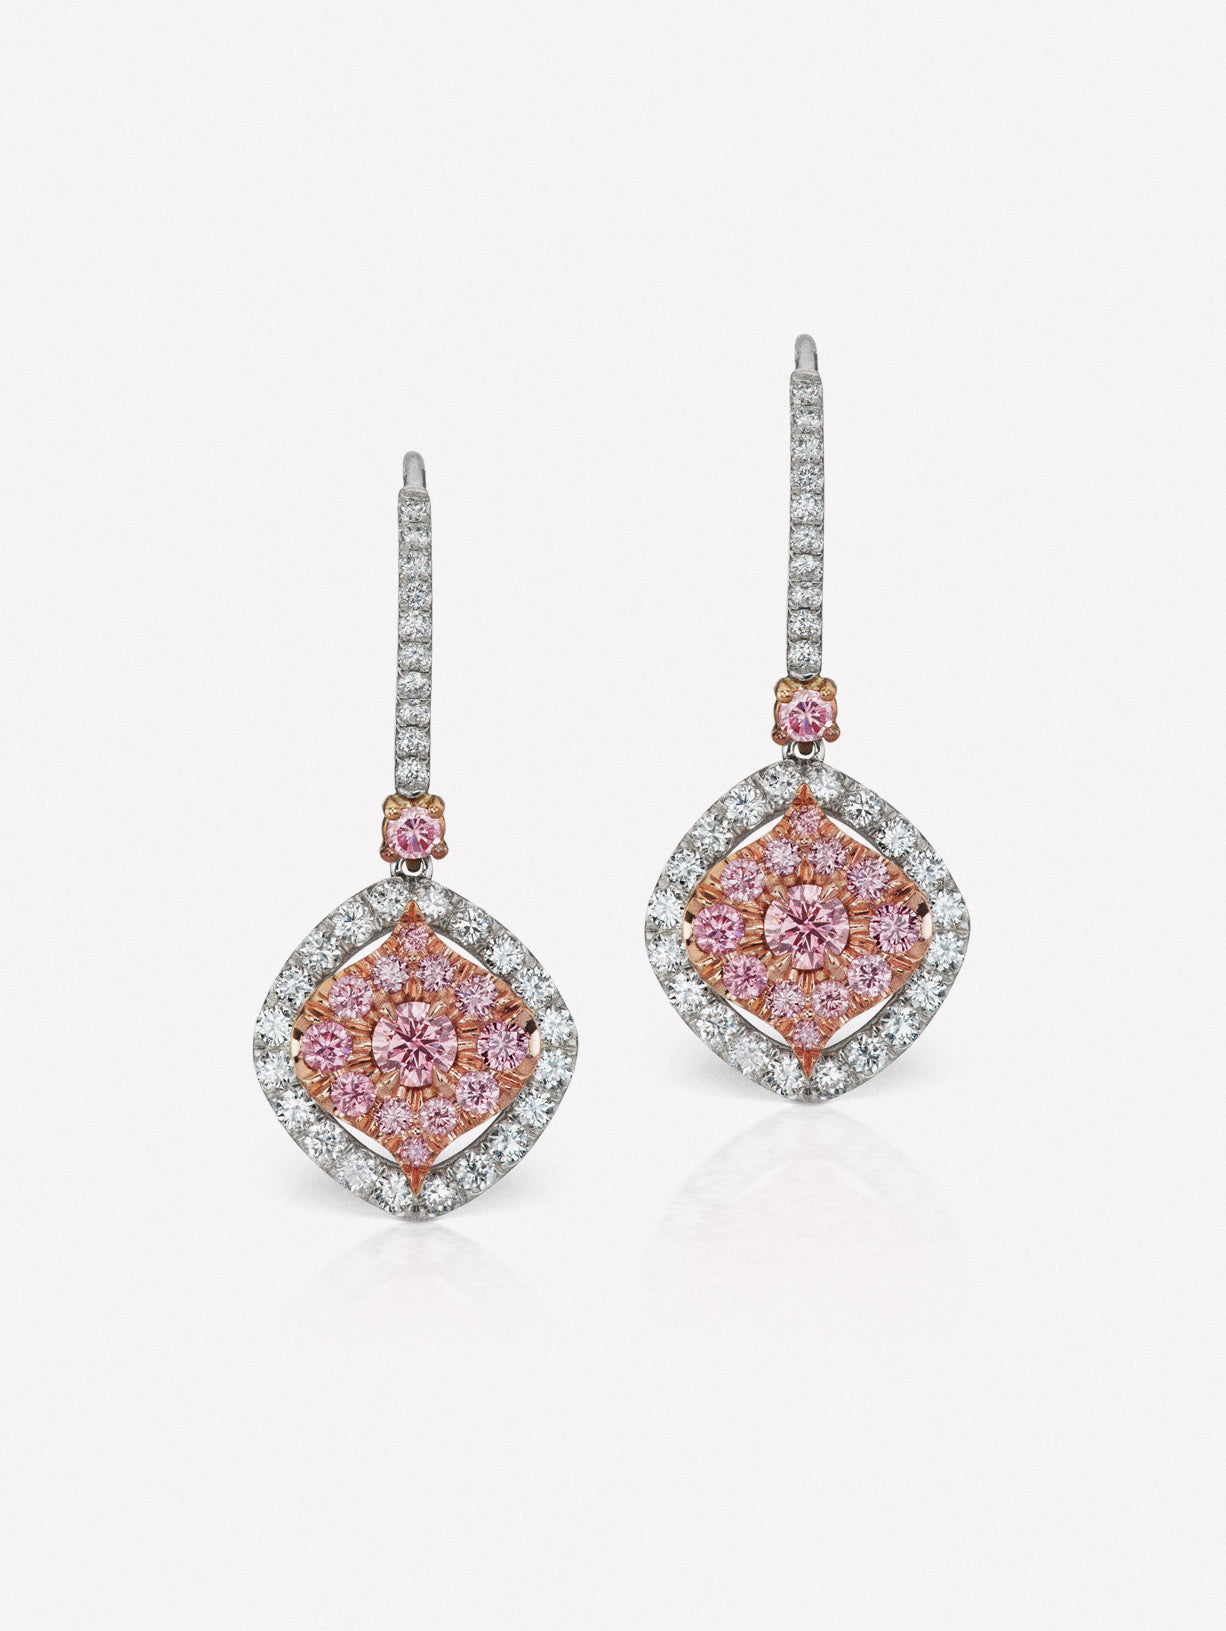 Argyle Pink™ Diamond Drop Earrings - Pink Diamonds, J FINE - J Fine, earrings - Pink Diamond Jewelry, argyle-pink™-diamond-drip-earrings-by-j-fine - Argyle Pink Diamonds